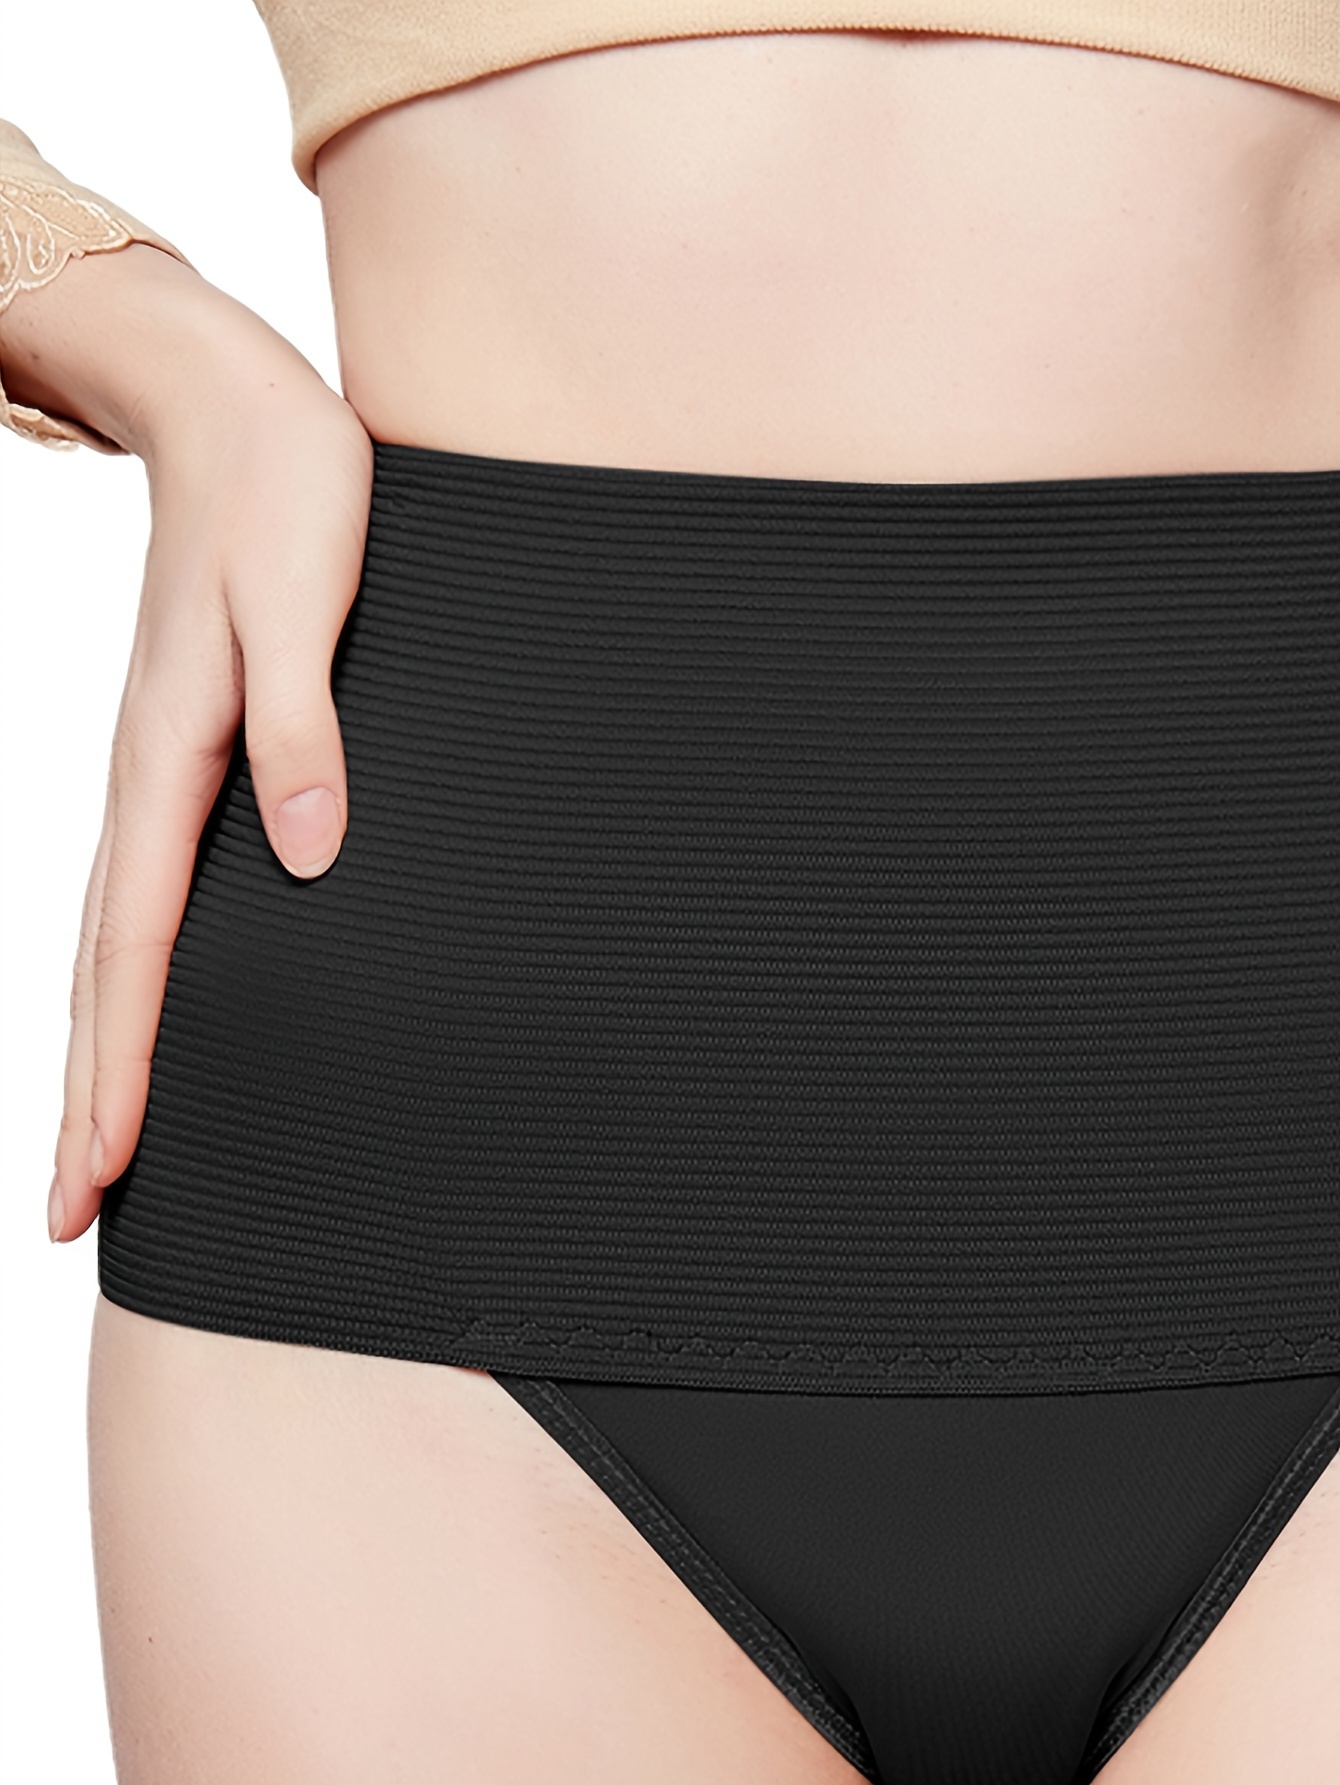 Women's Maternity Postpartum Bikini Tummy Control Pants, Bodybuilding  Medium Stretchy Triangle Briefs, Abdominal Support Underwear For Pregnant  Women